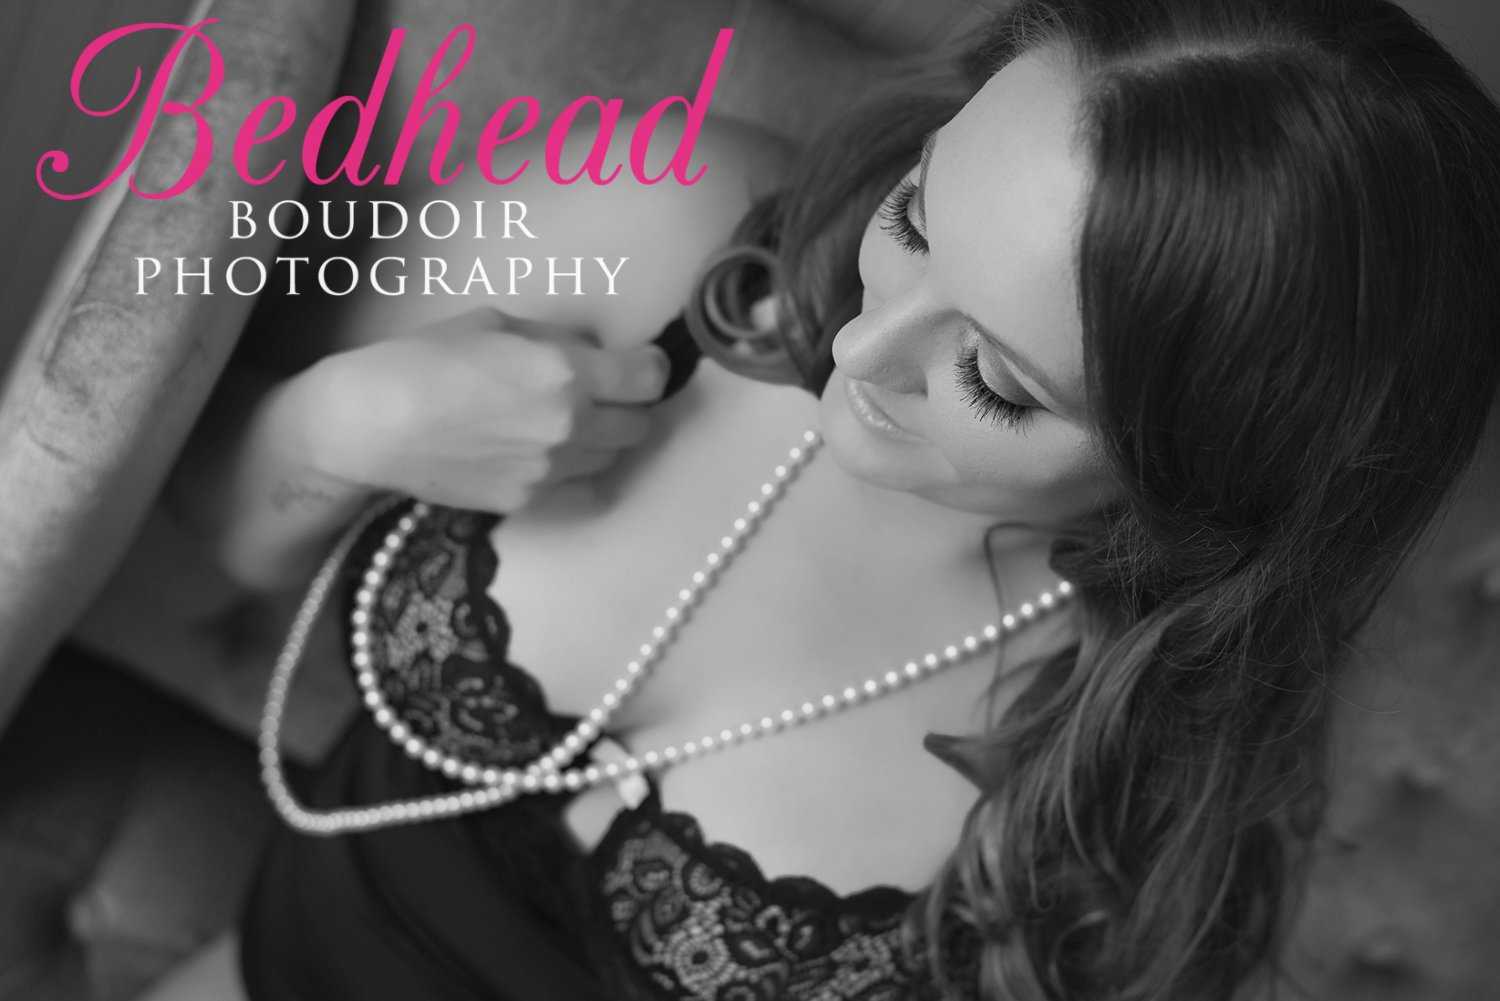 Boudoir Album — Bedhead Boudoir Photography - Chicago, IL & Tampa, FL